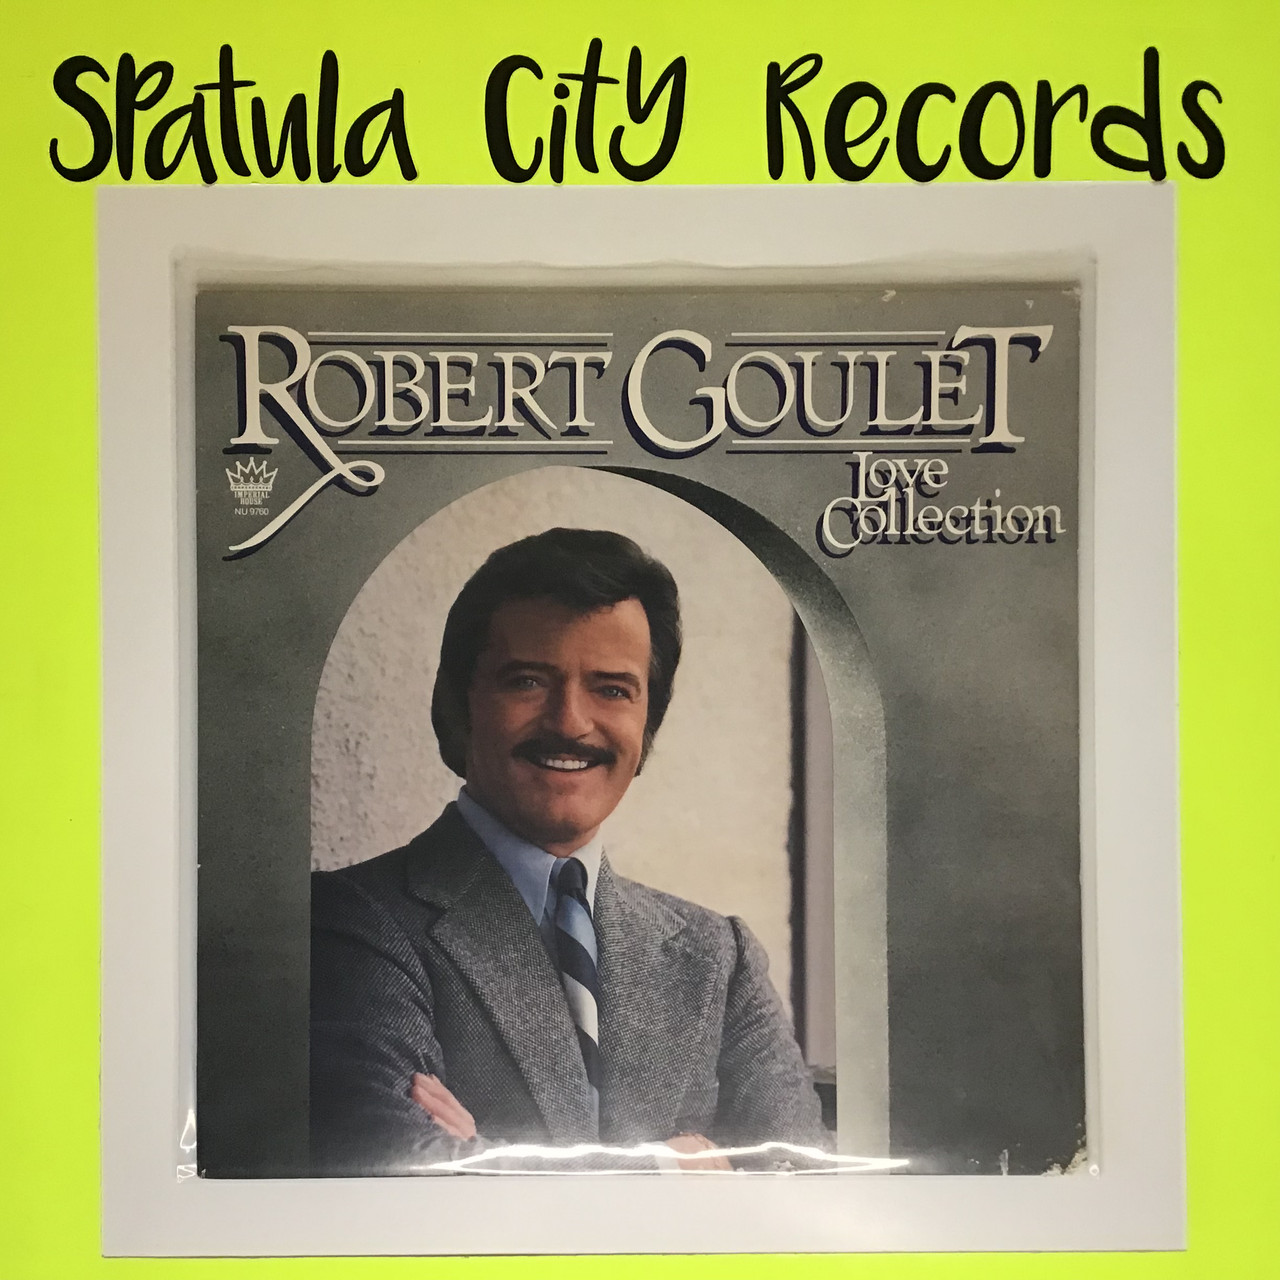 Robert Goulet - Love Collection - vinyl record LP